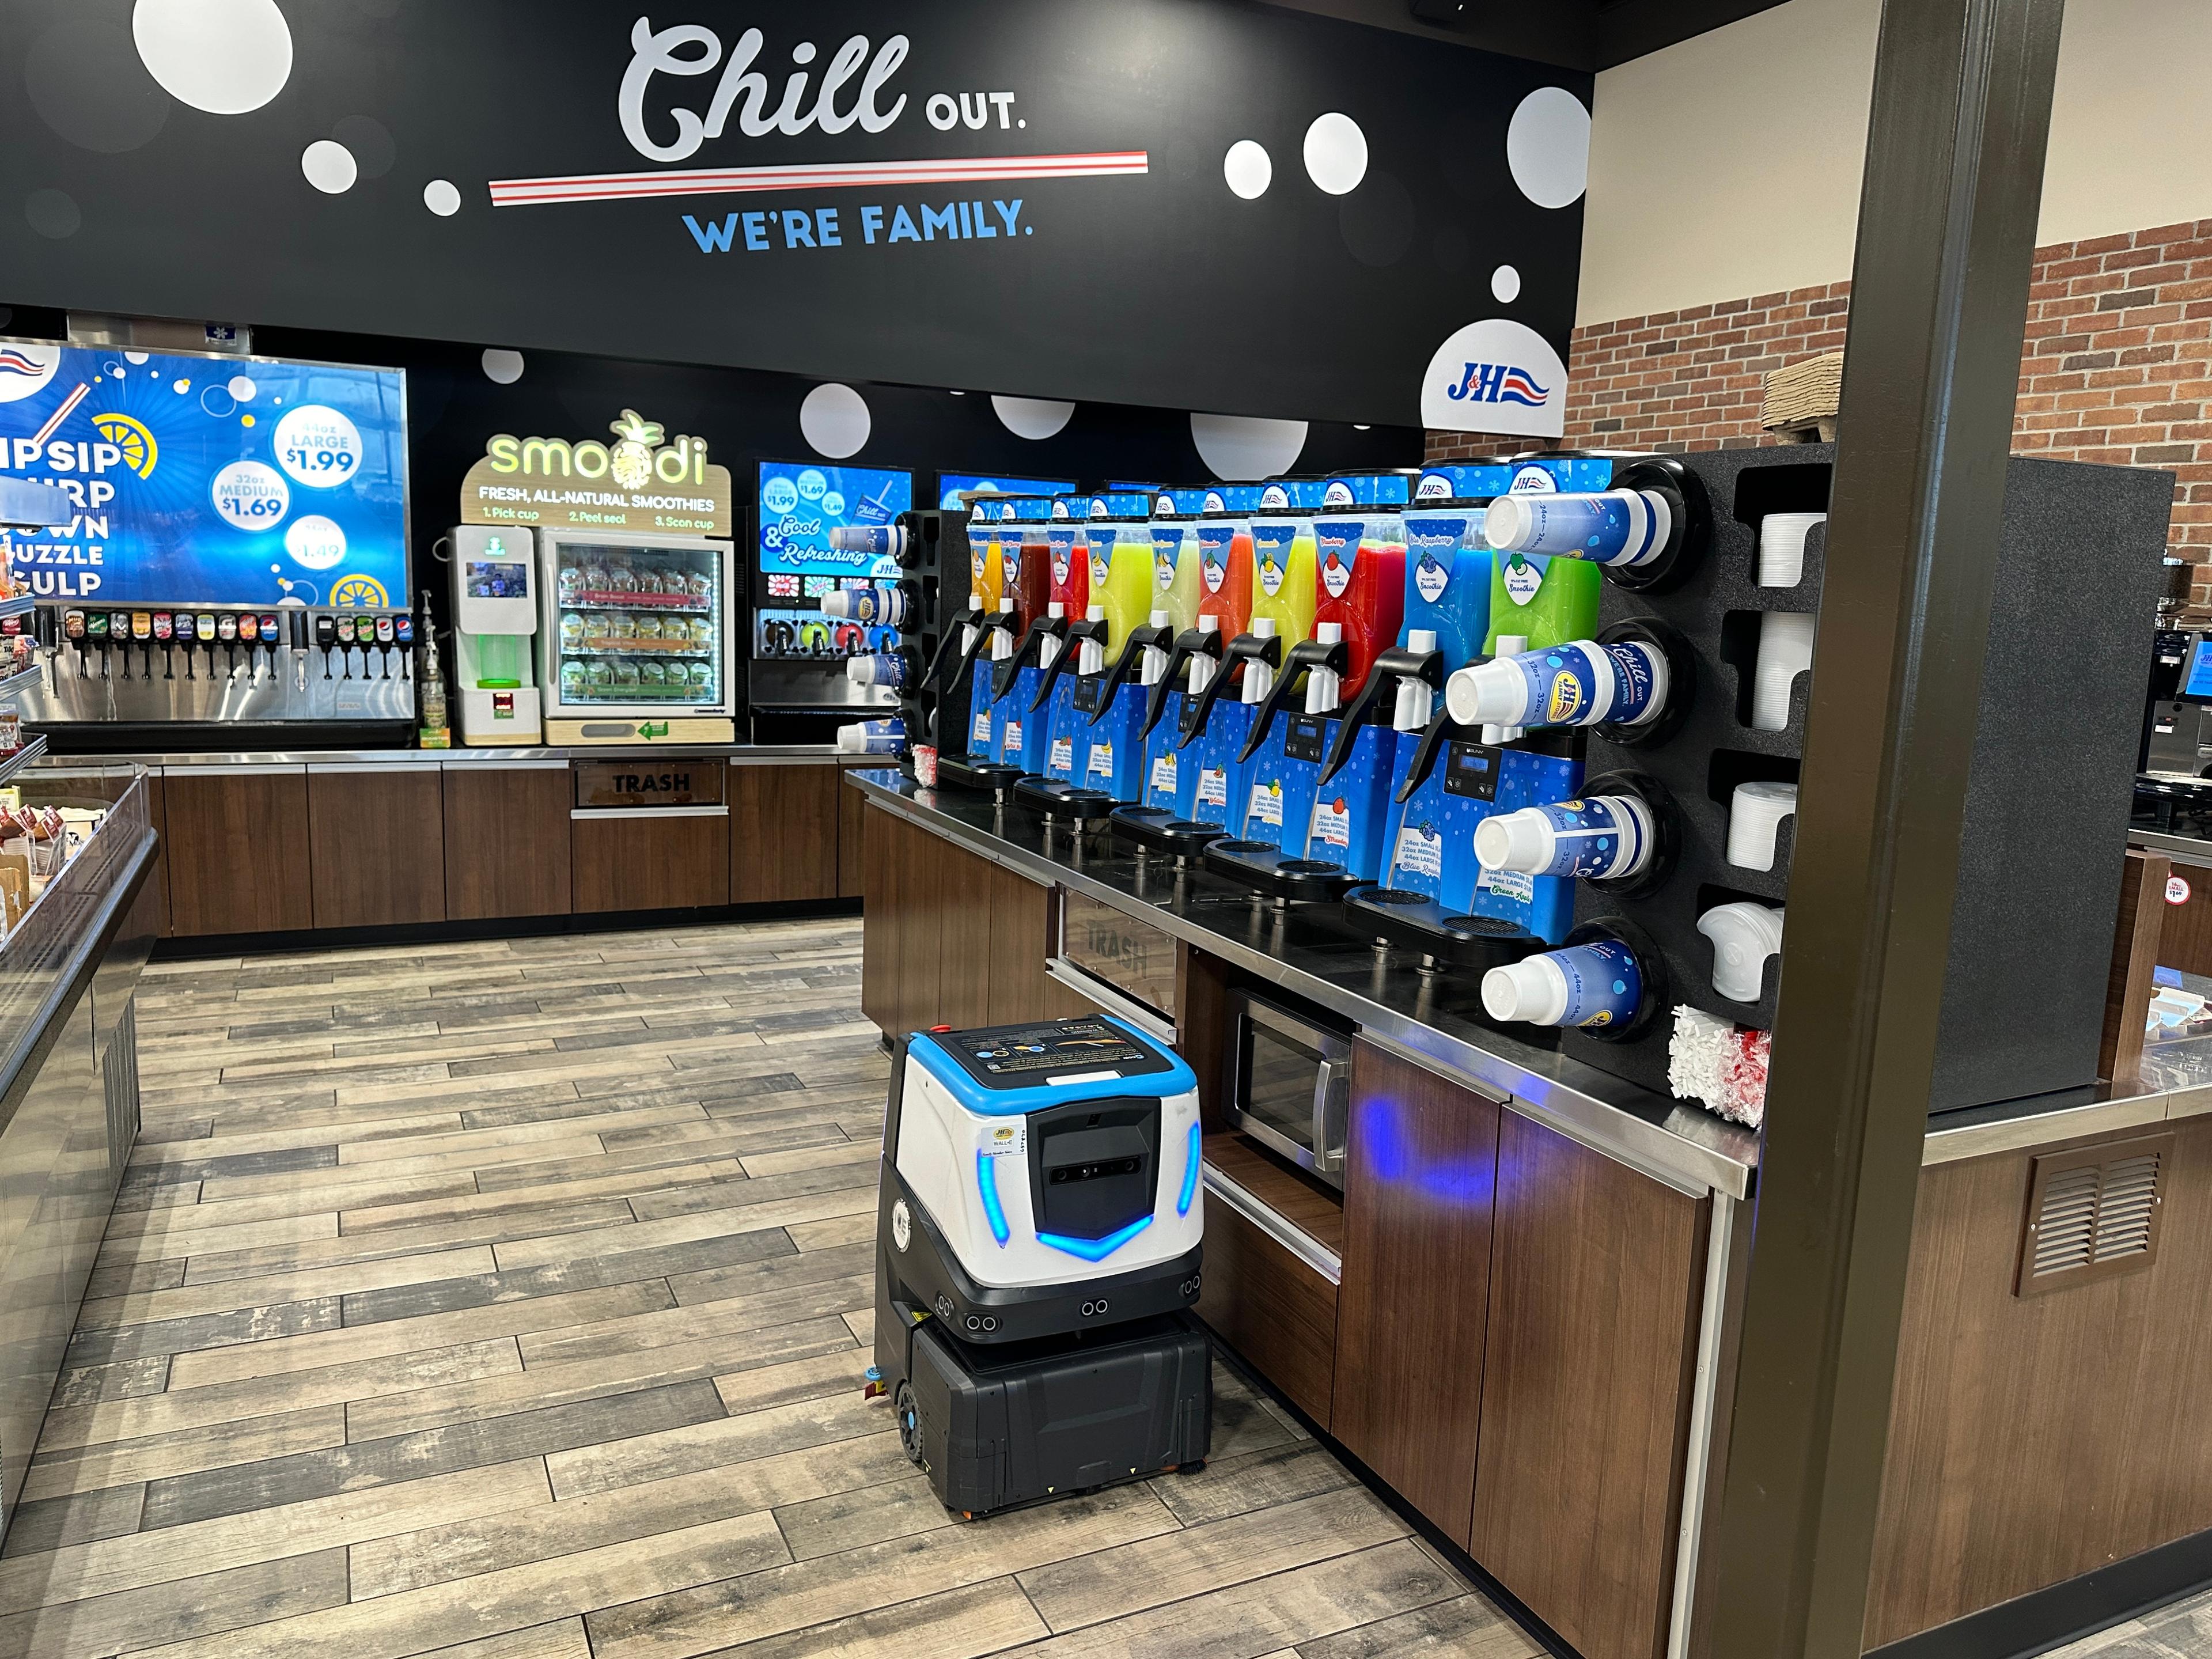 Cobi 18, robotic floor scrubber,  navigating around soda machines at convenience store